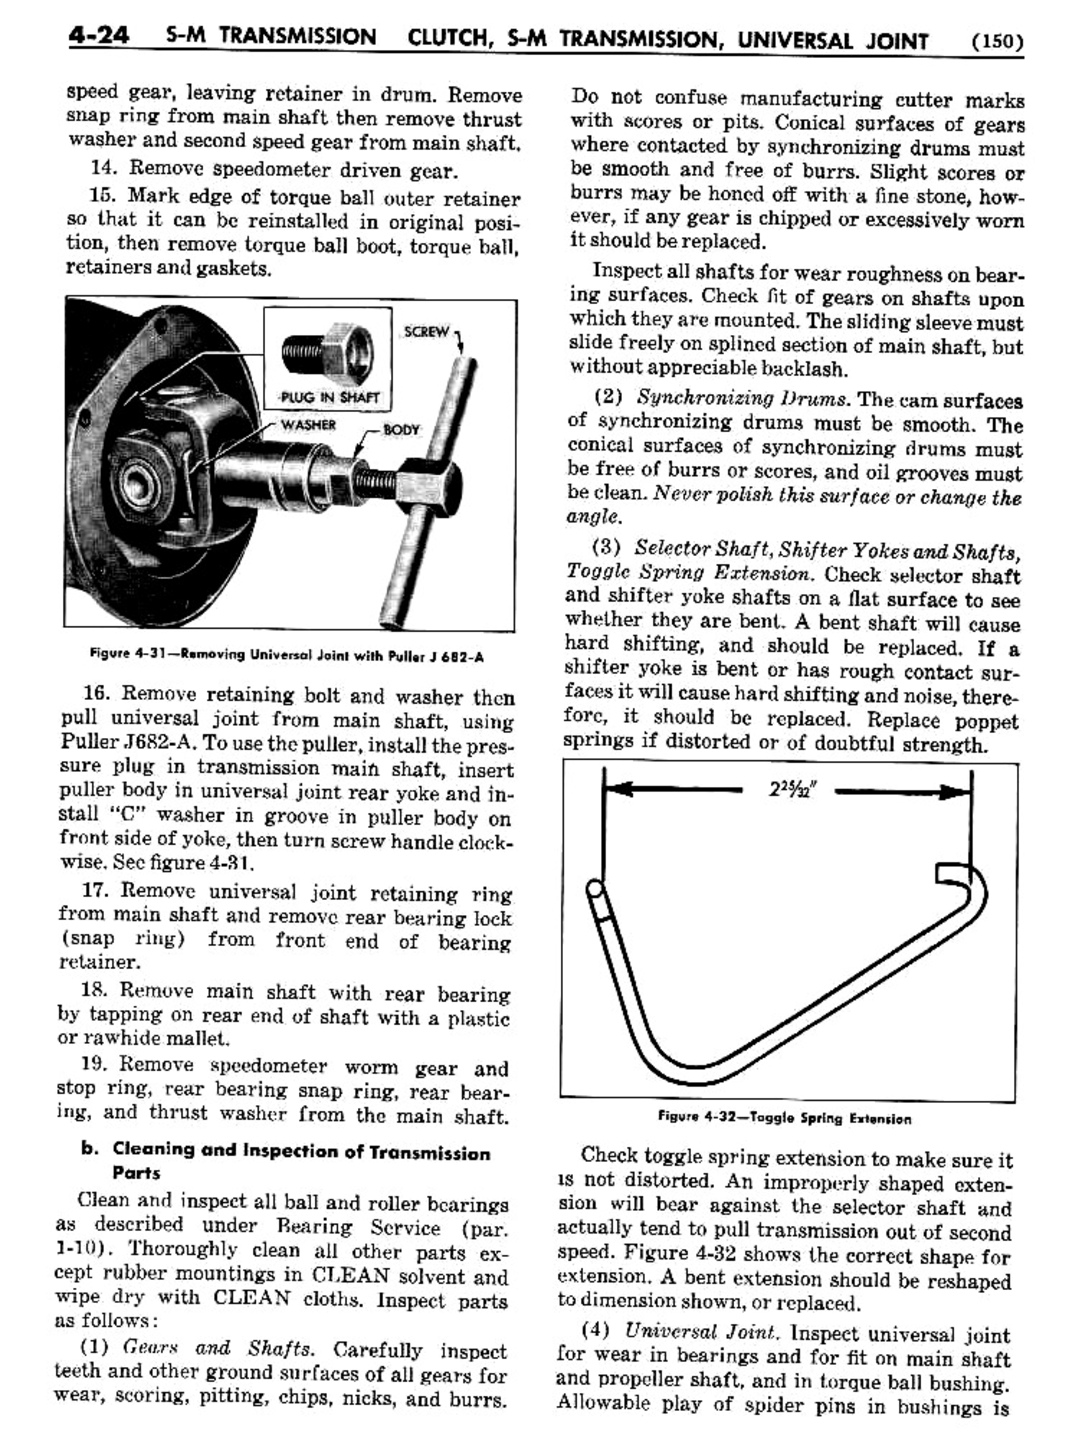 n_05 1954 Buick Shop Manual - Clutch & Trans-024-024.jpg